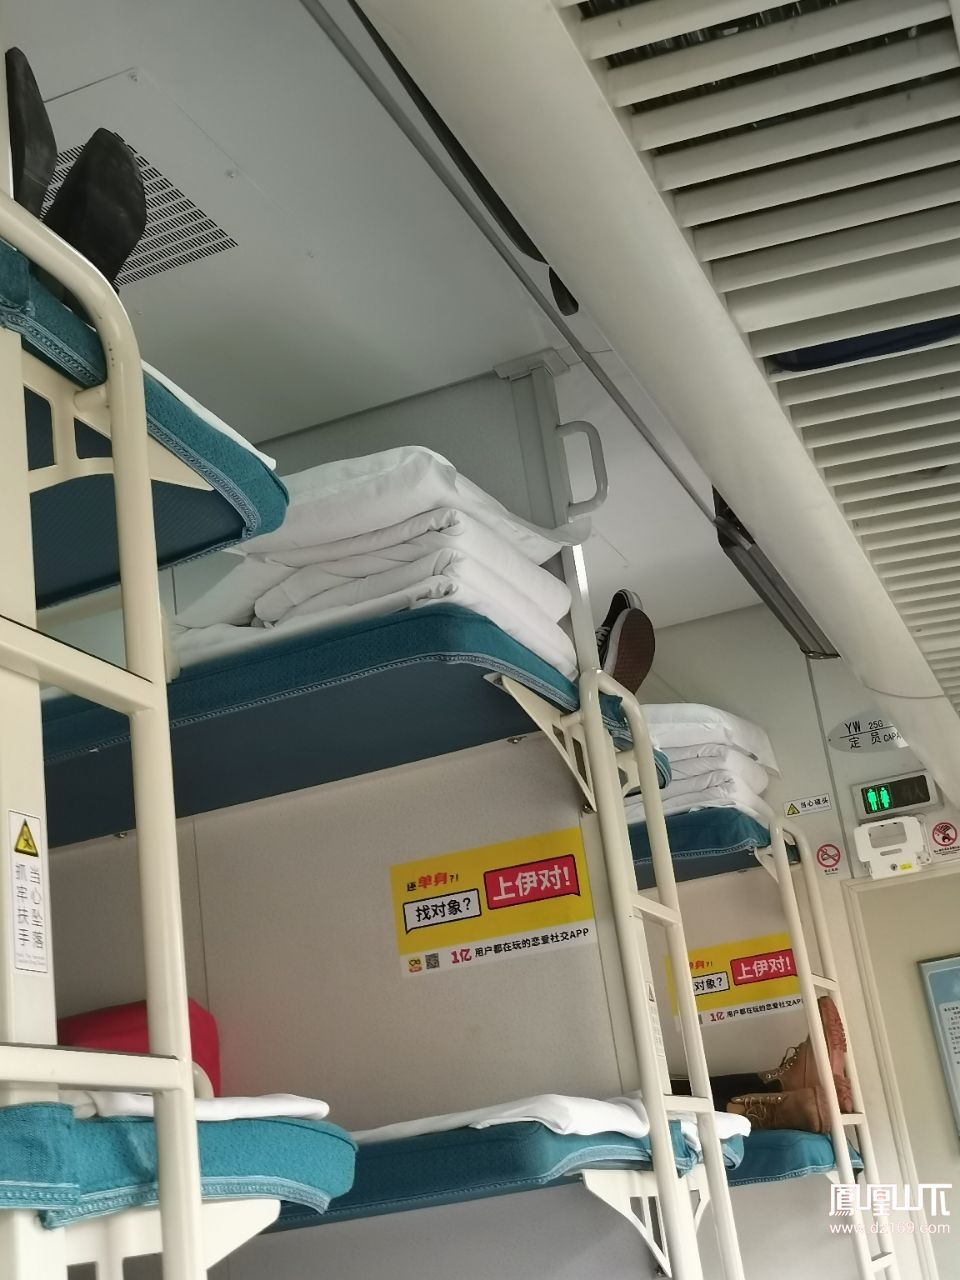 k16重庆西站卧铺乘客睡觉不脱鞋子素质呢